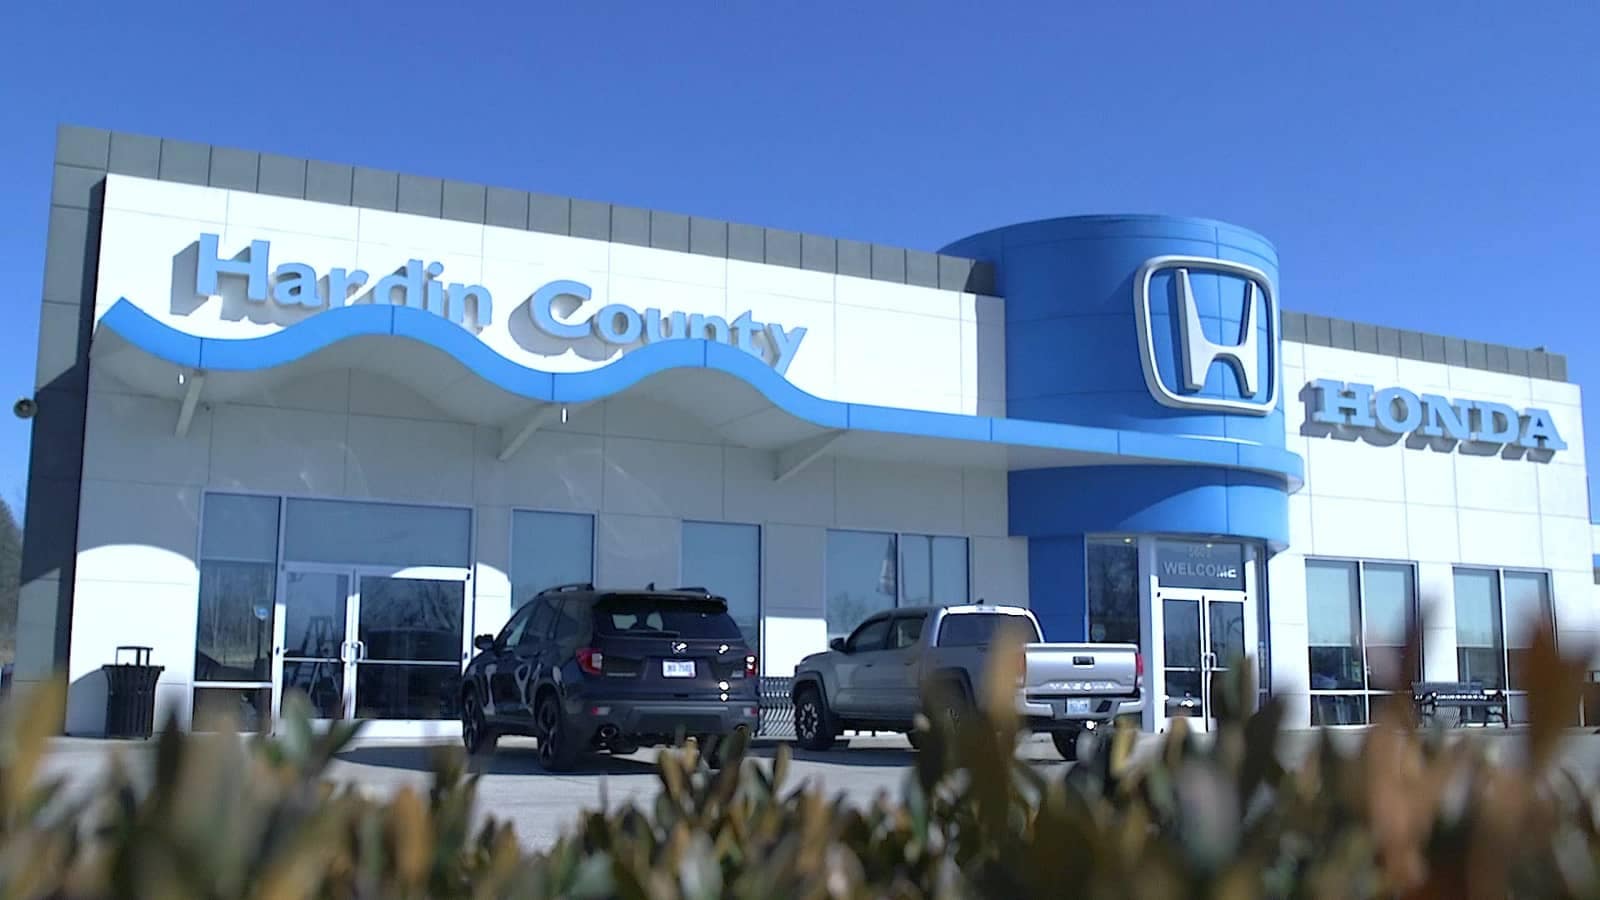 Hardin County Honda dealership